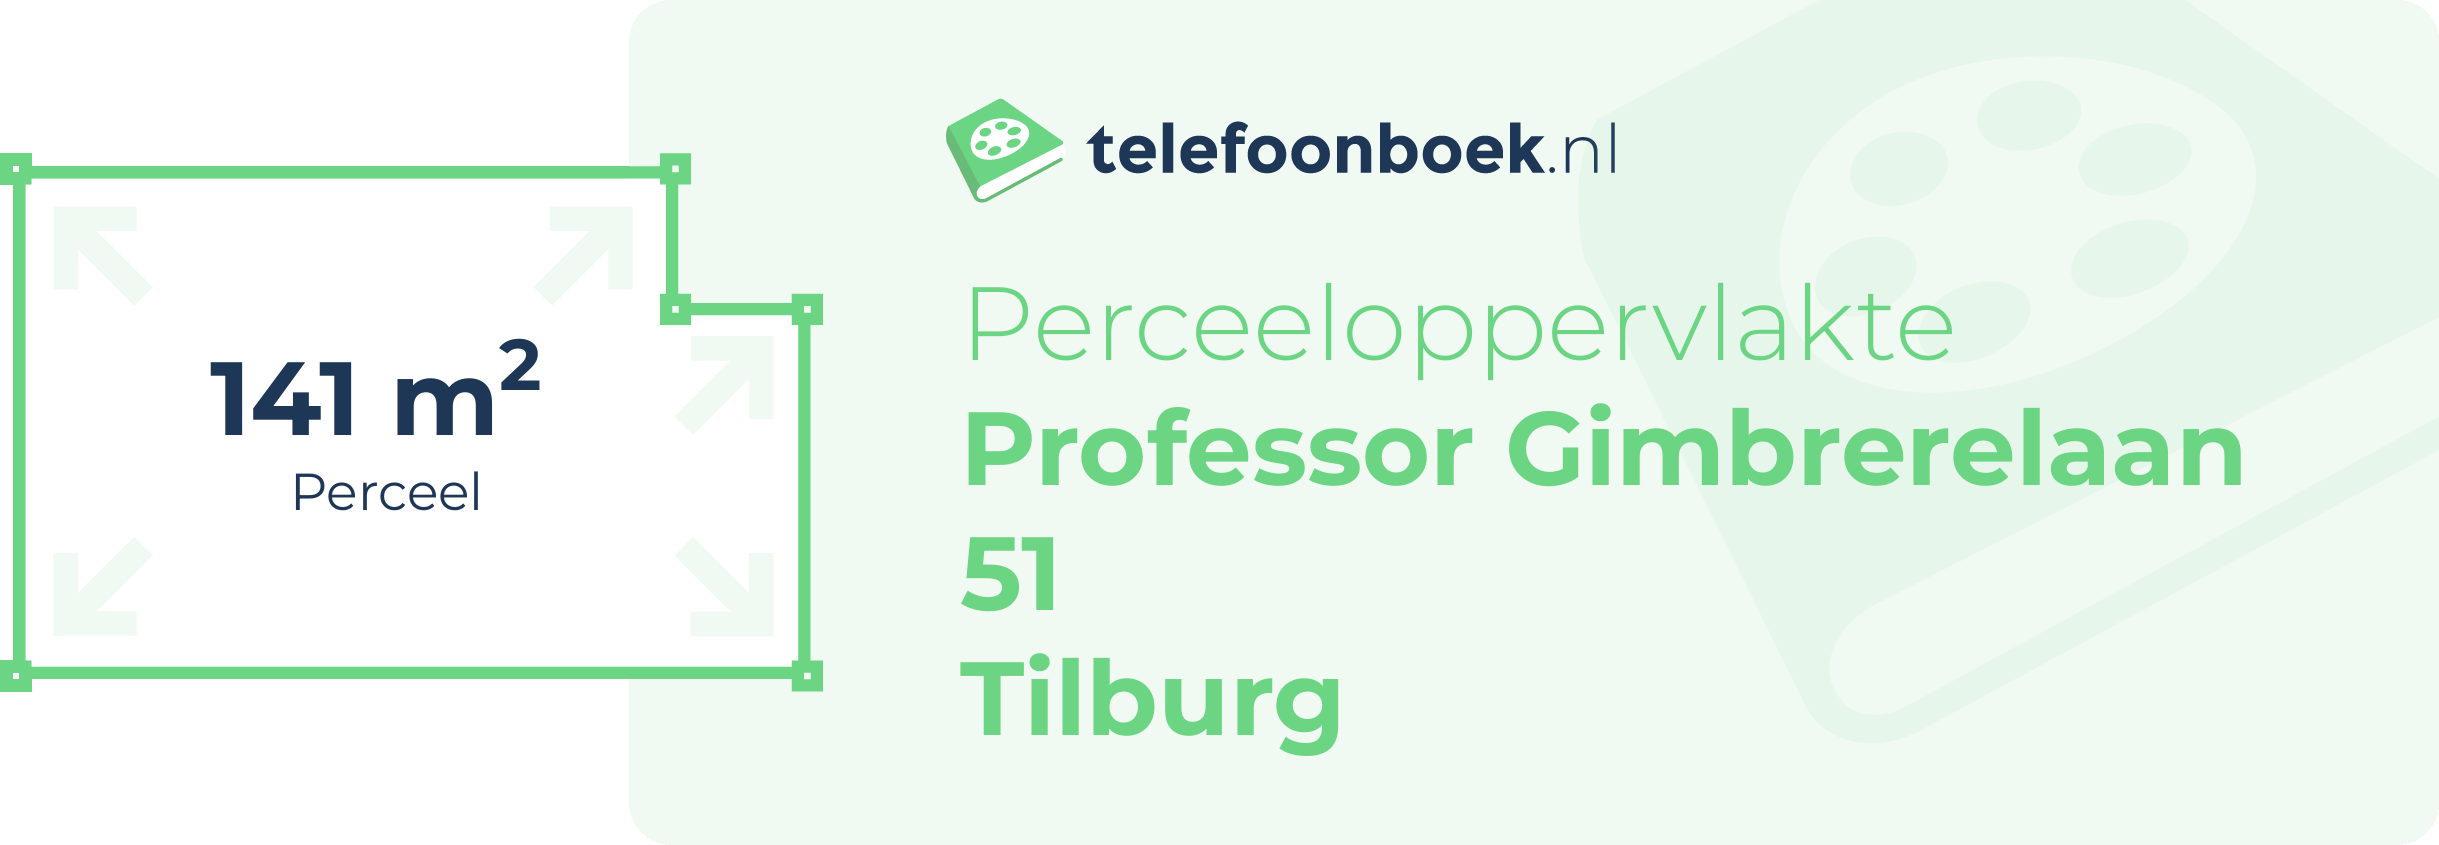 Perceeloppervlakte Professor Gimbrerelaan 51 Tilburg